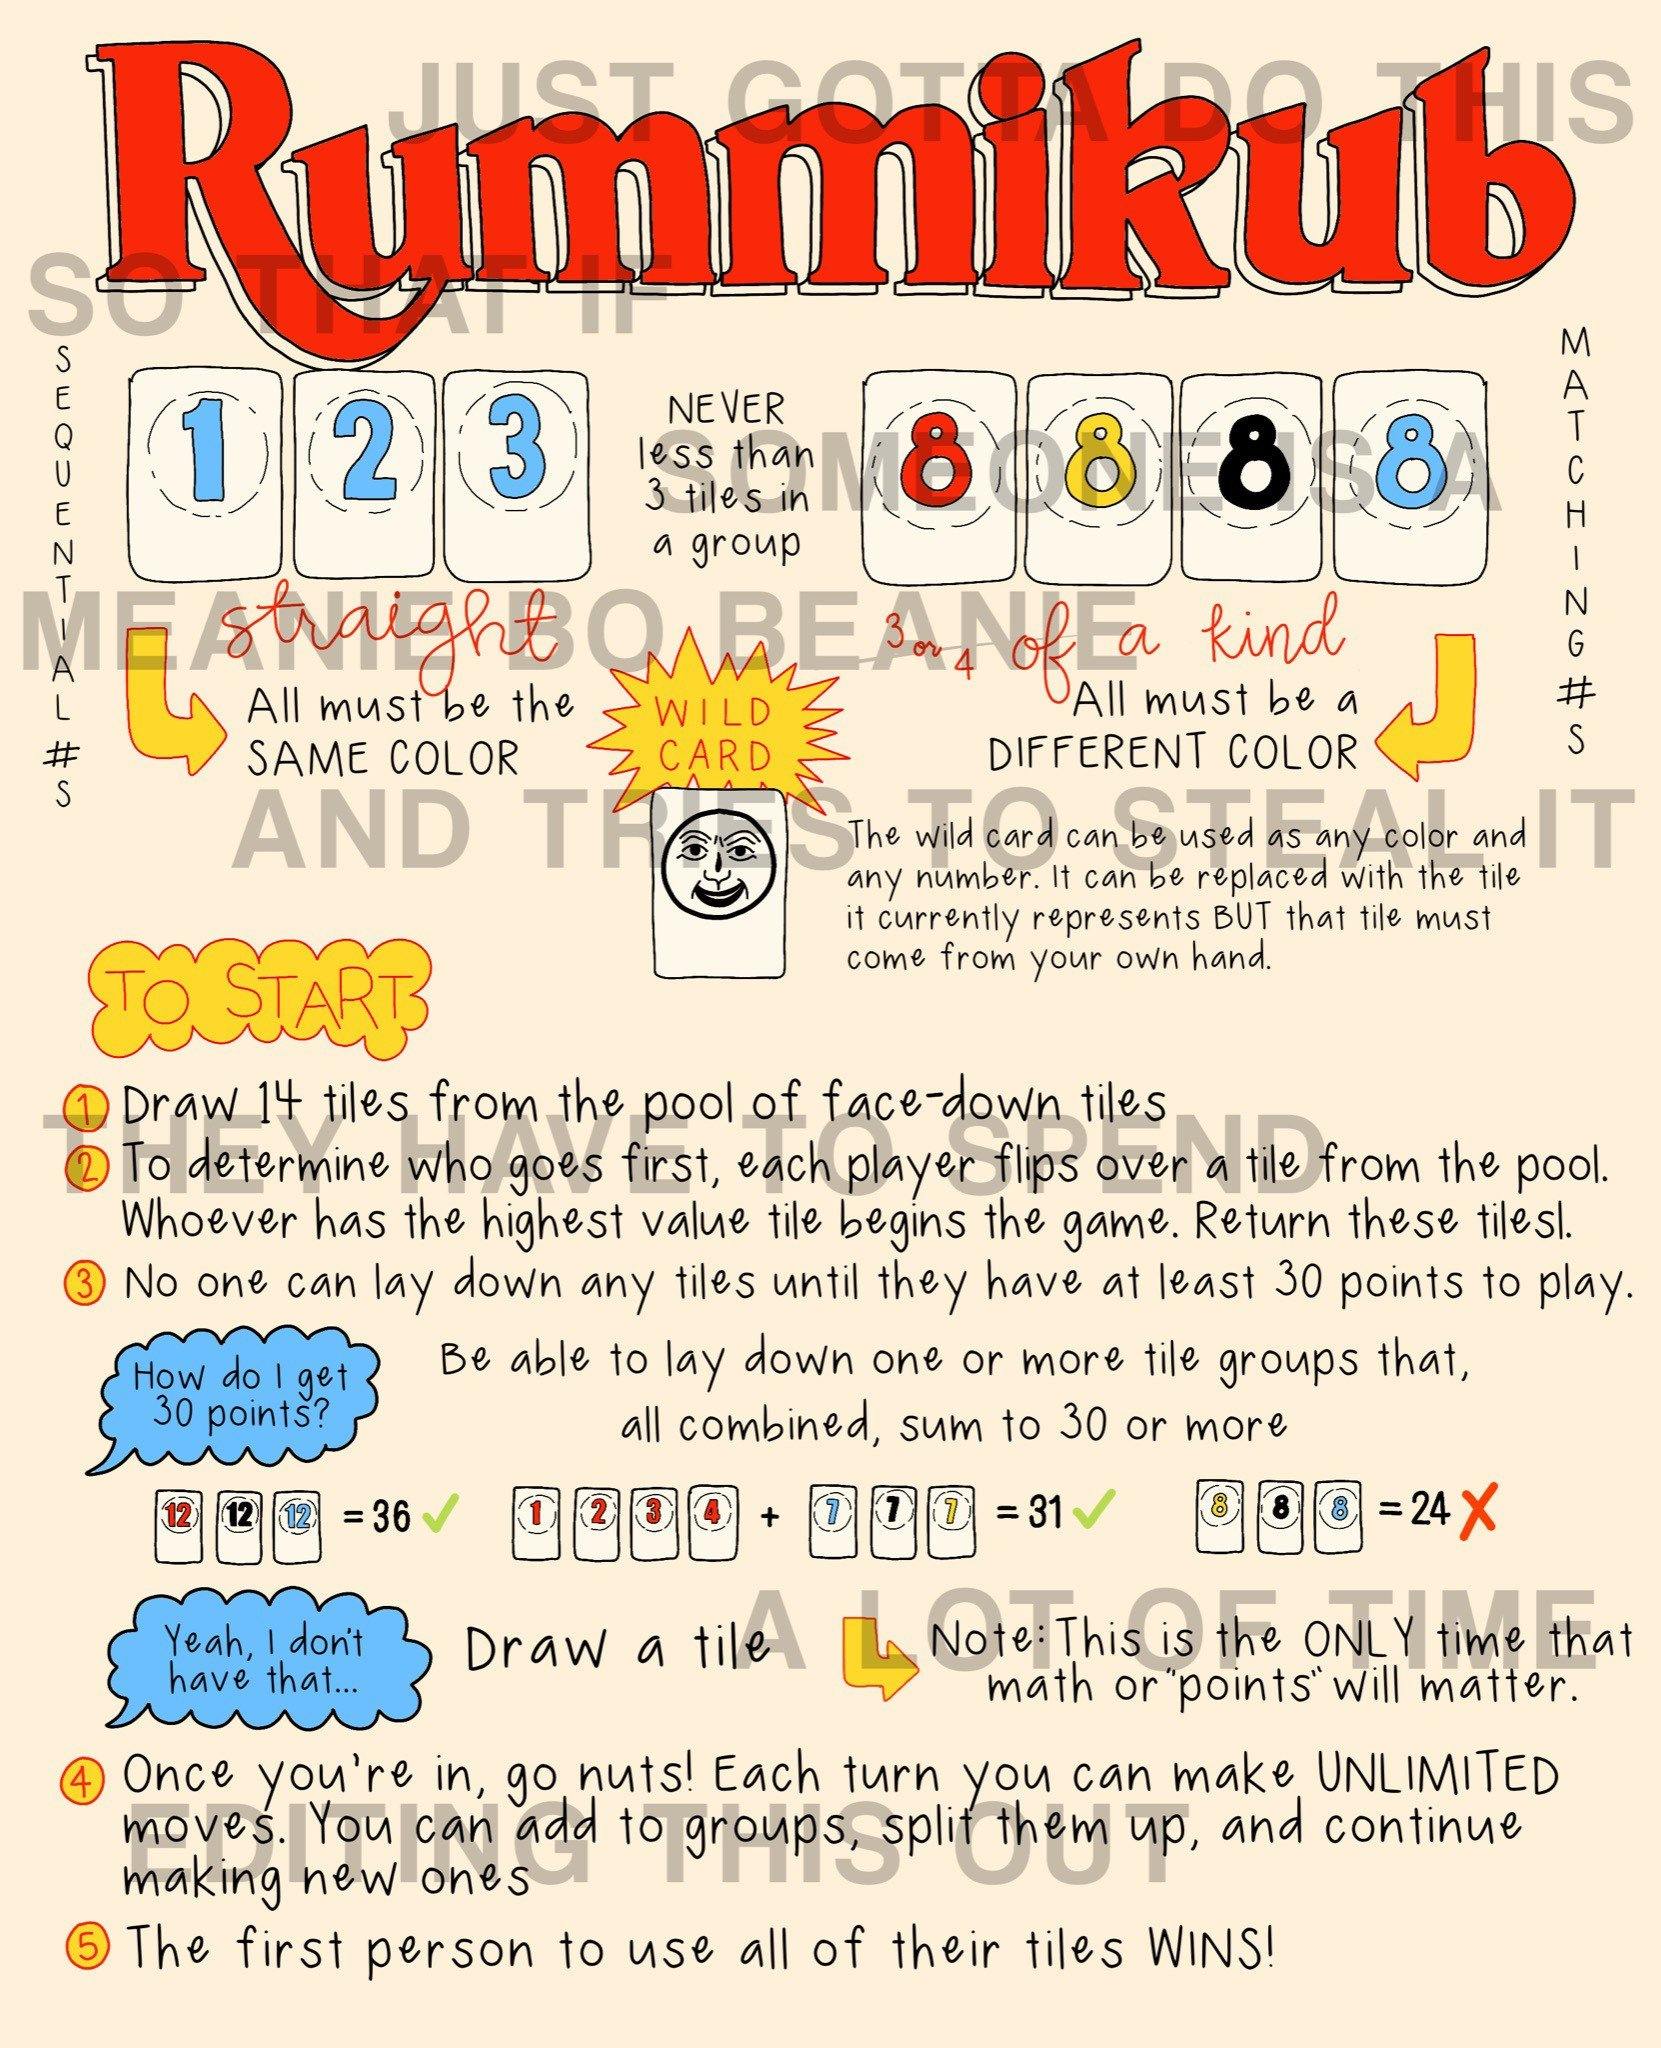 Rummikub Instructions Illustrated Game Guide Digital Download